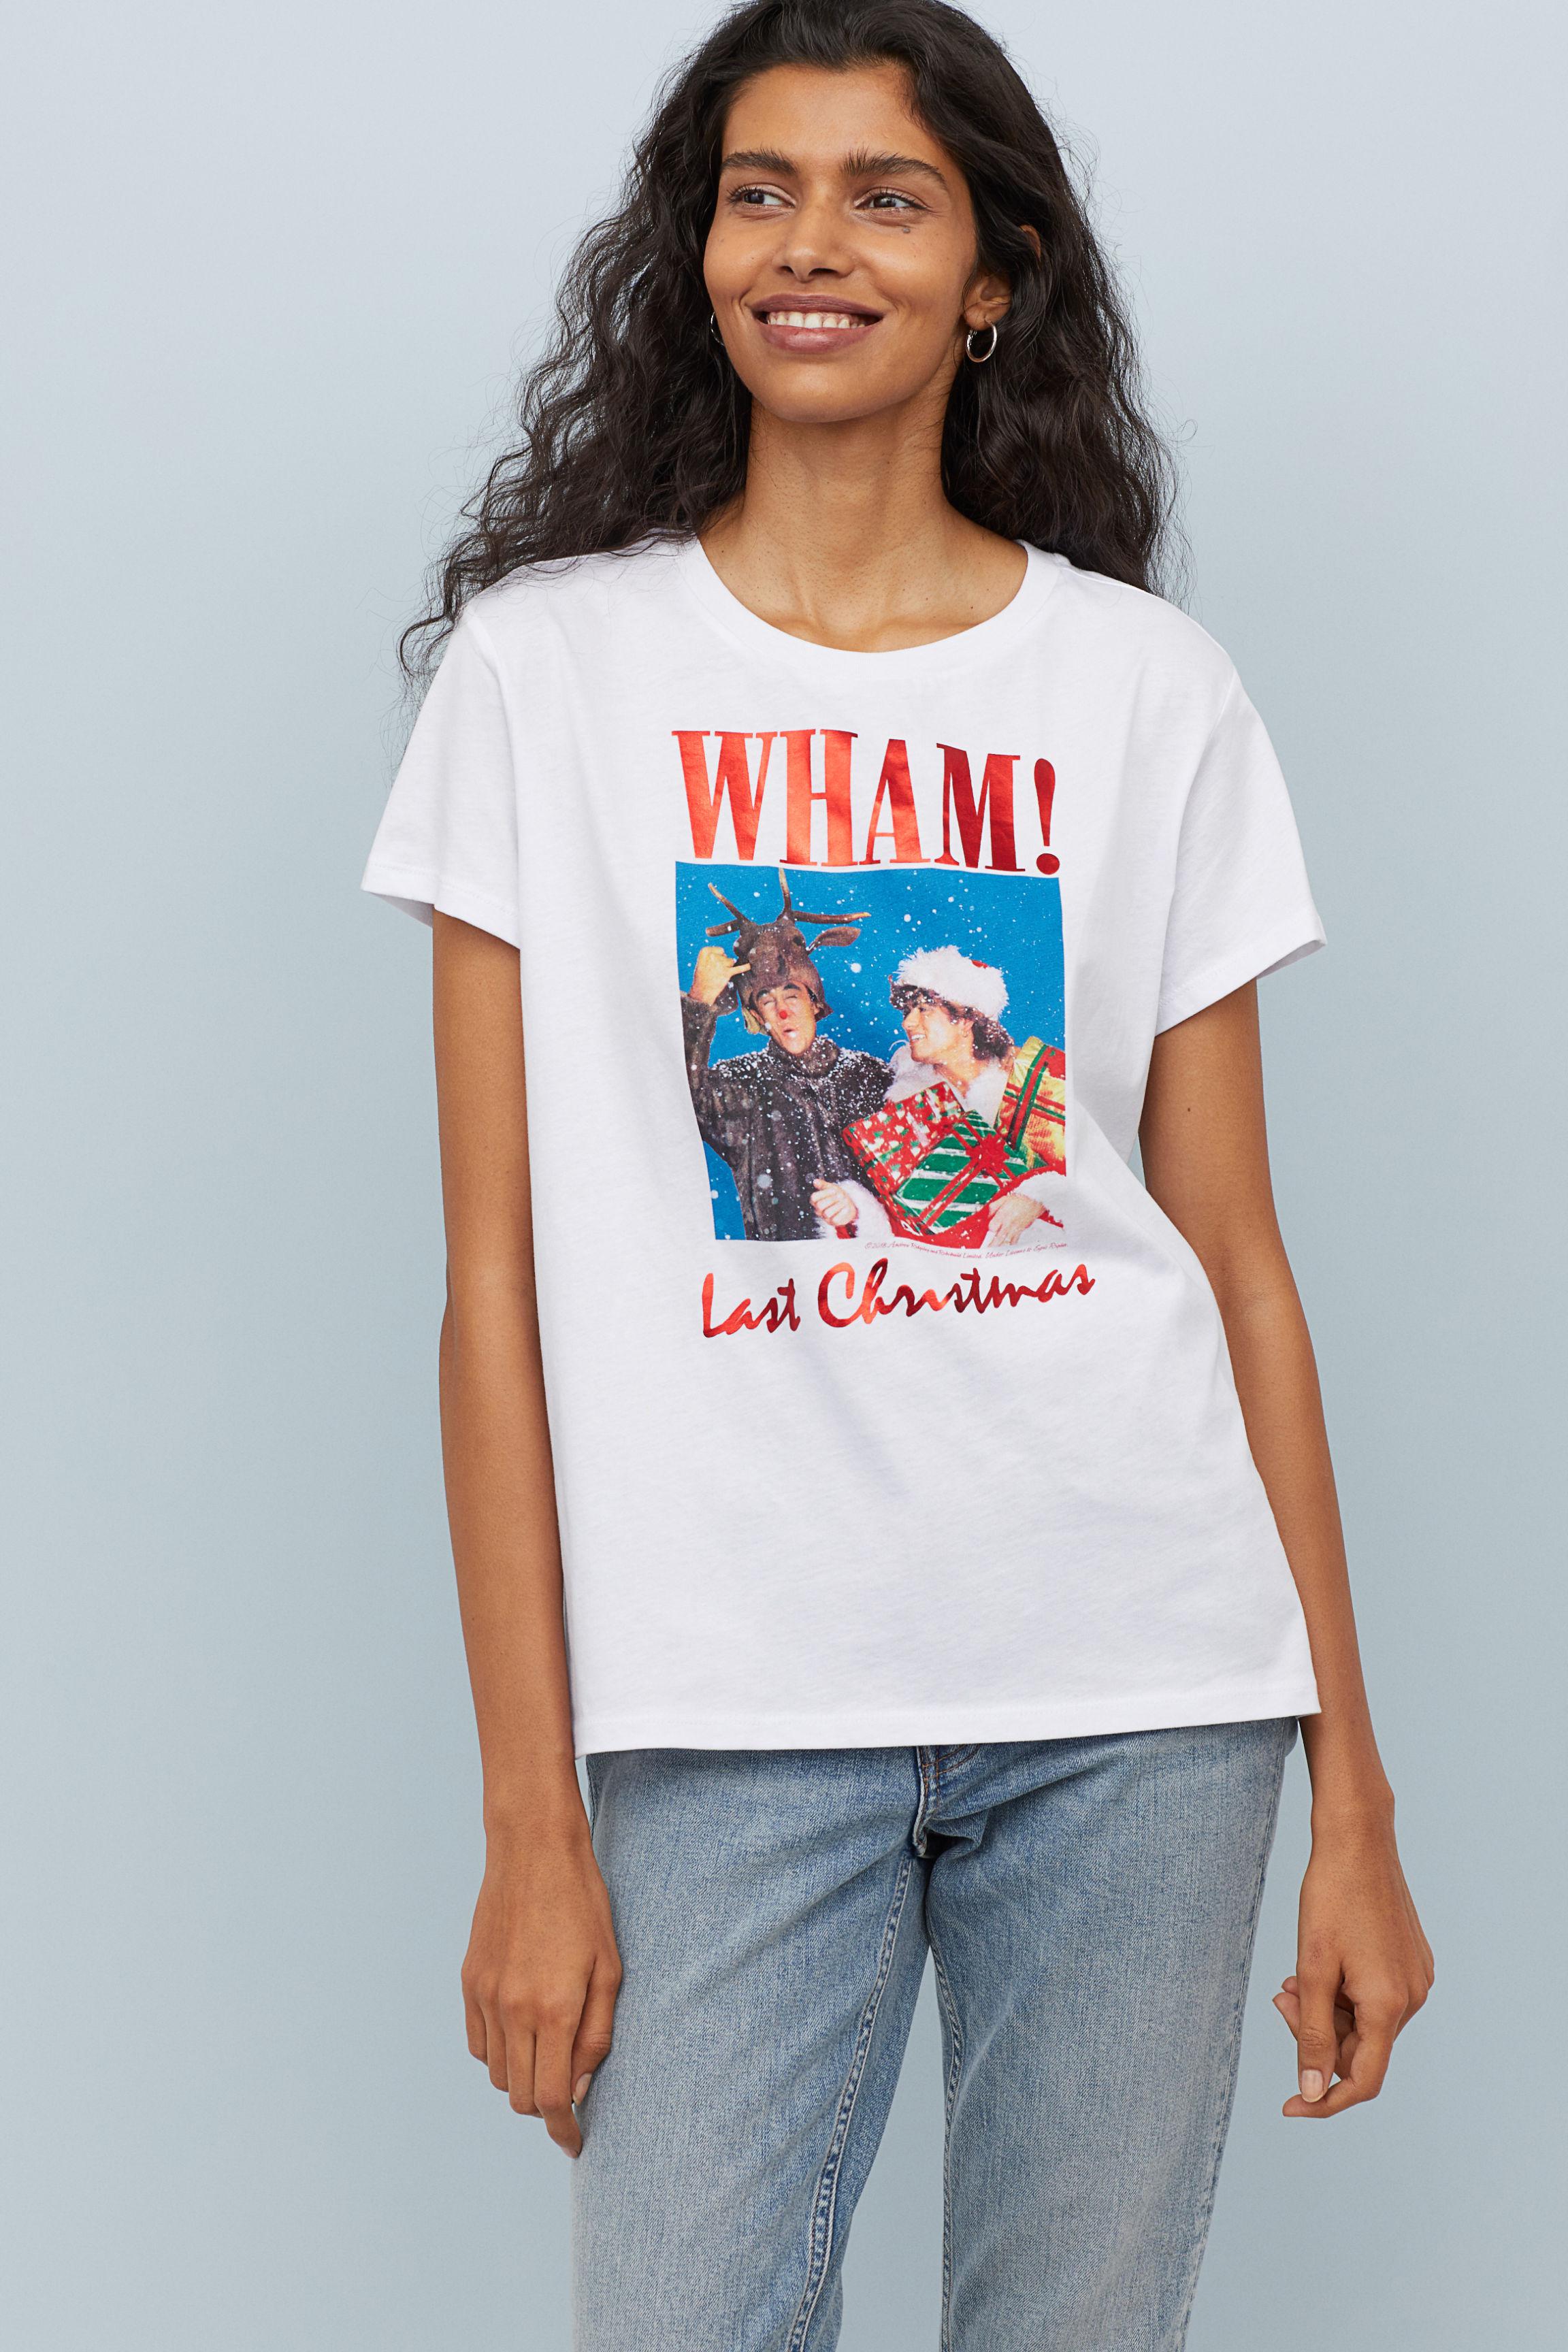 H&m Wham Last Christmas Clearance, 52% OFF | www.colegiogamarra.com